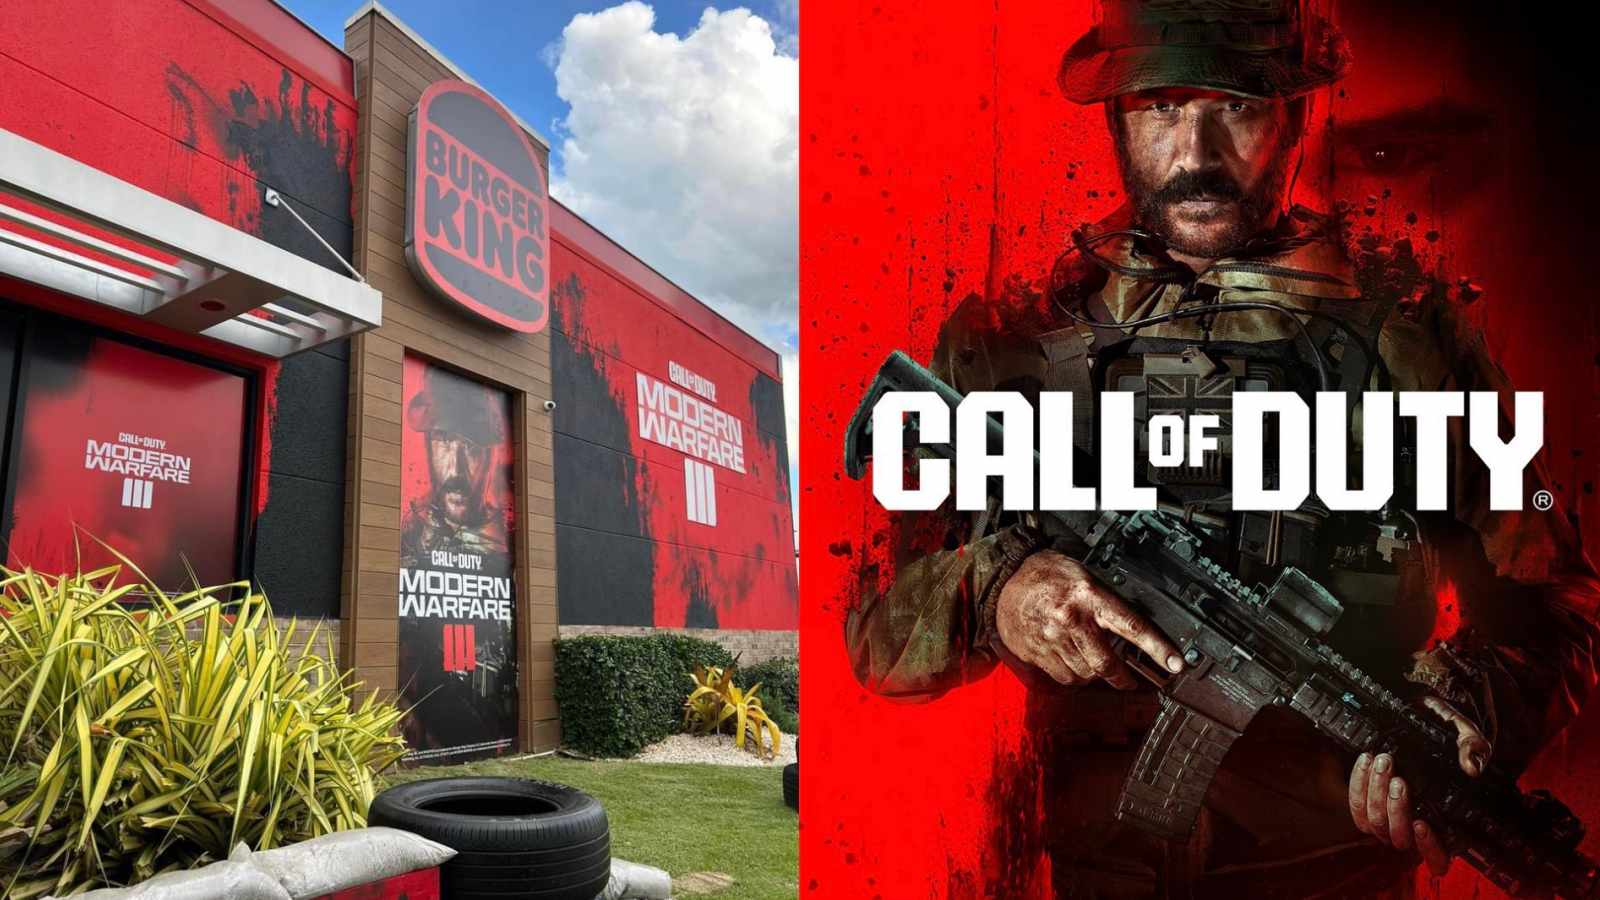 Burger King gets massive Modern Warfare 3 makeover to celebrate new CoD -  Dexerto